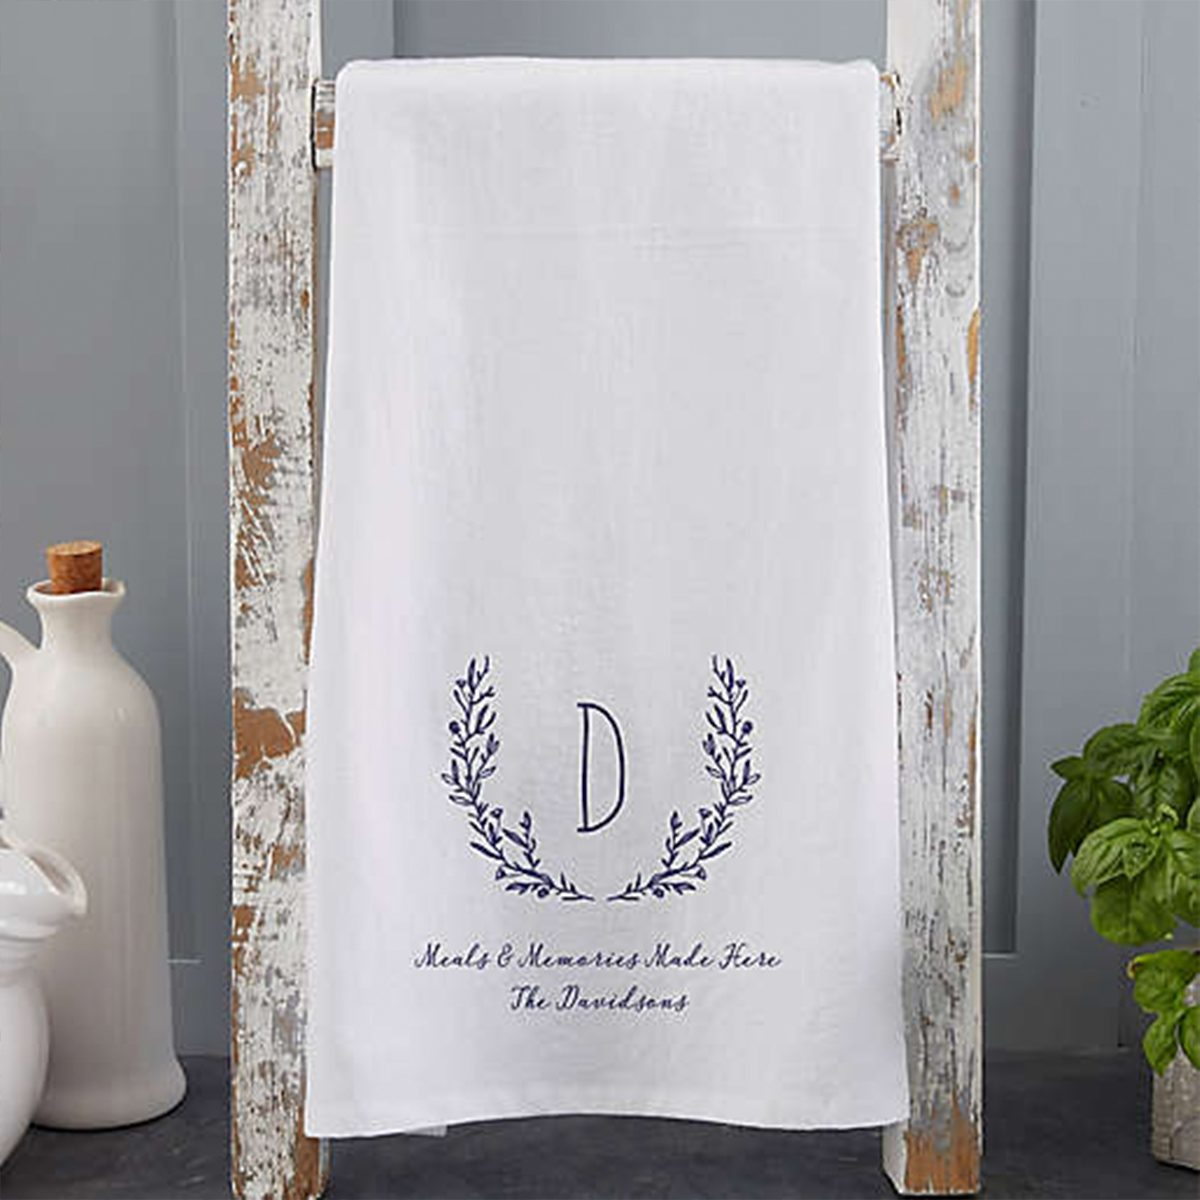 Recipe For a Special Grandma Personalized Tea Towel